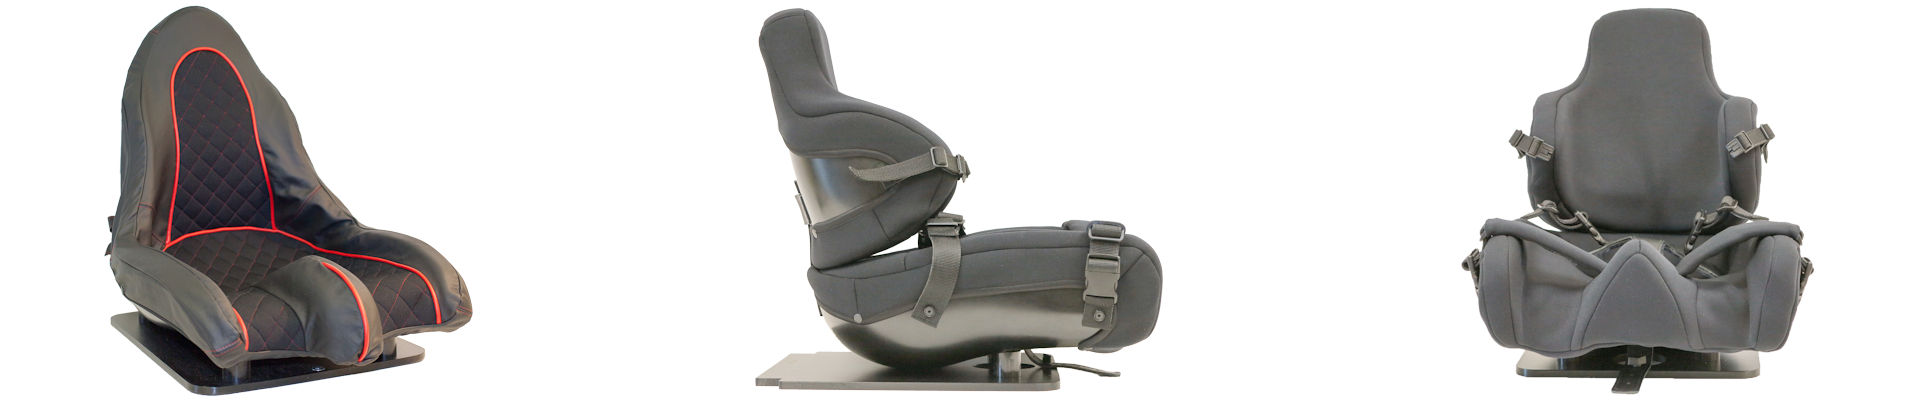 Slide 2 - orthopedic seats